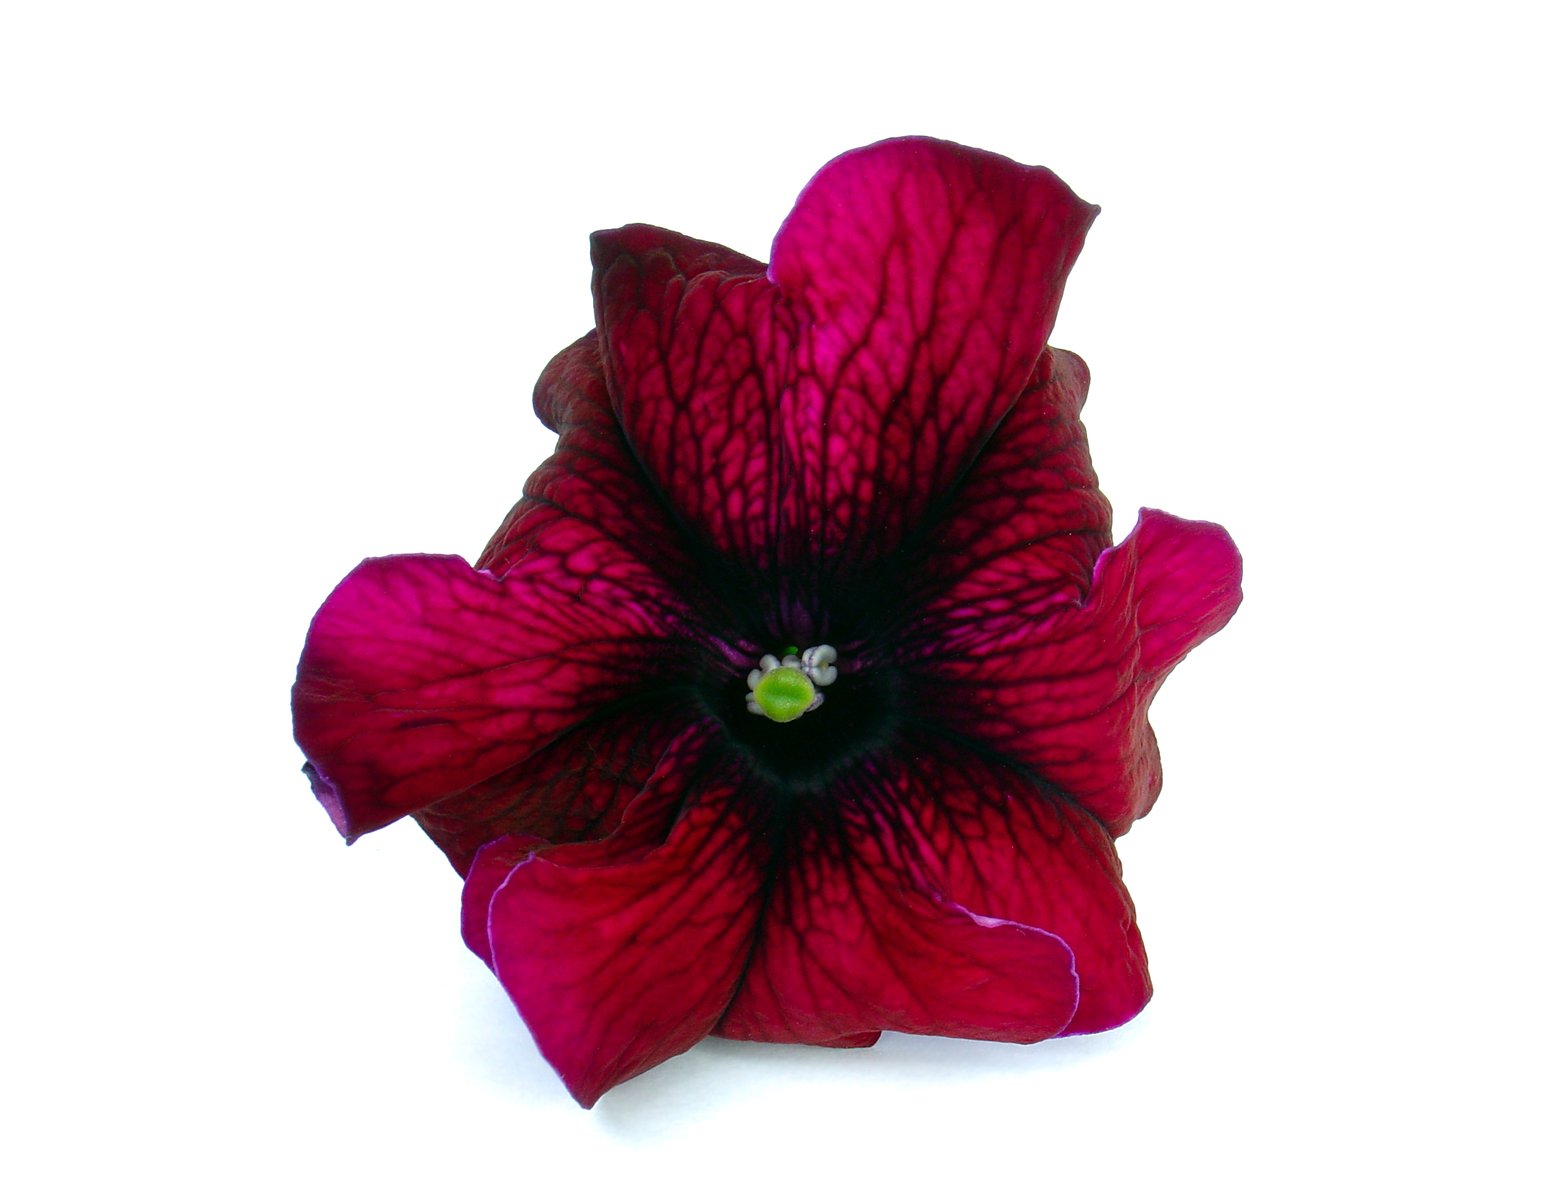 a beautiful flower with dark purple petals